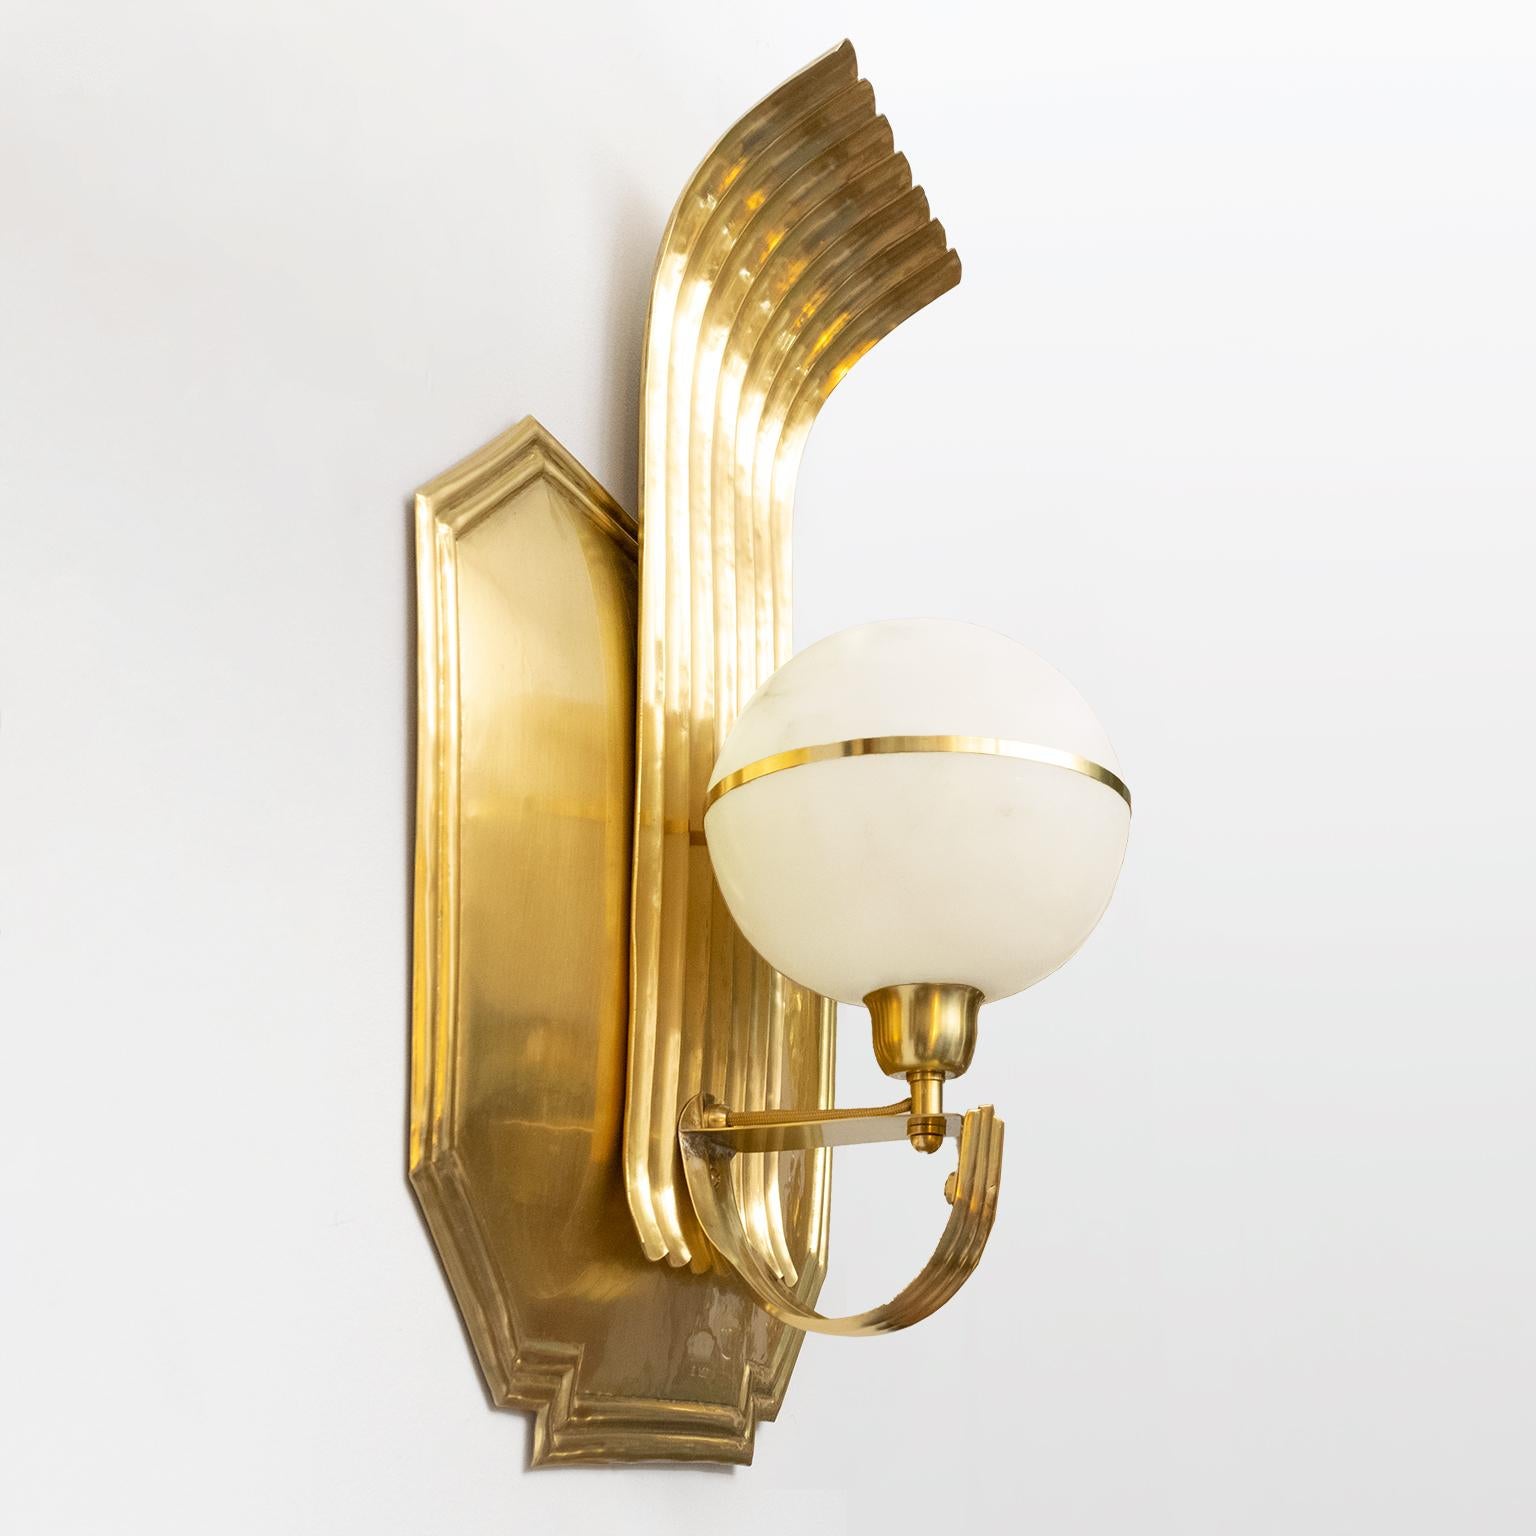 20th Century Scandinavian Modern Art Deco Polished Brass Sconce with Alabaster Globe Shade